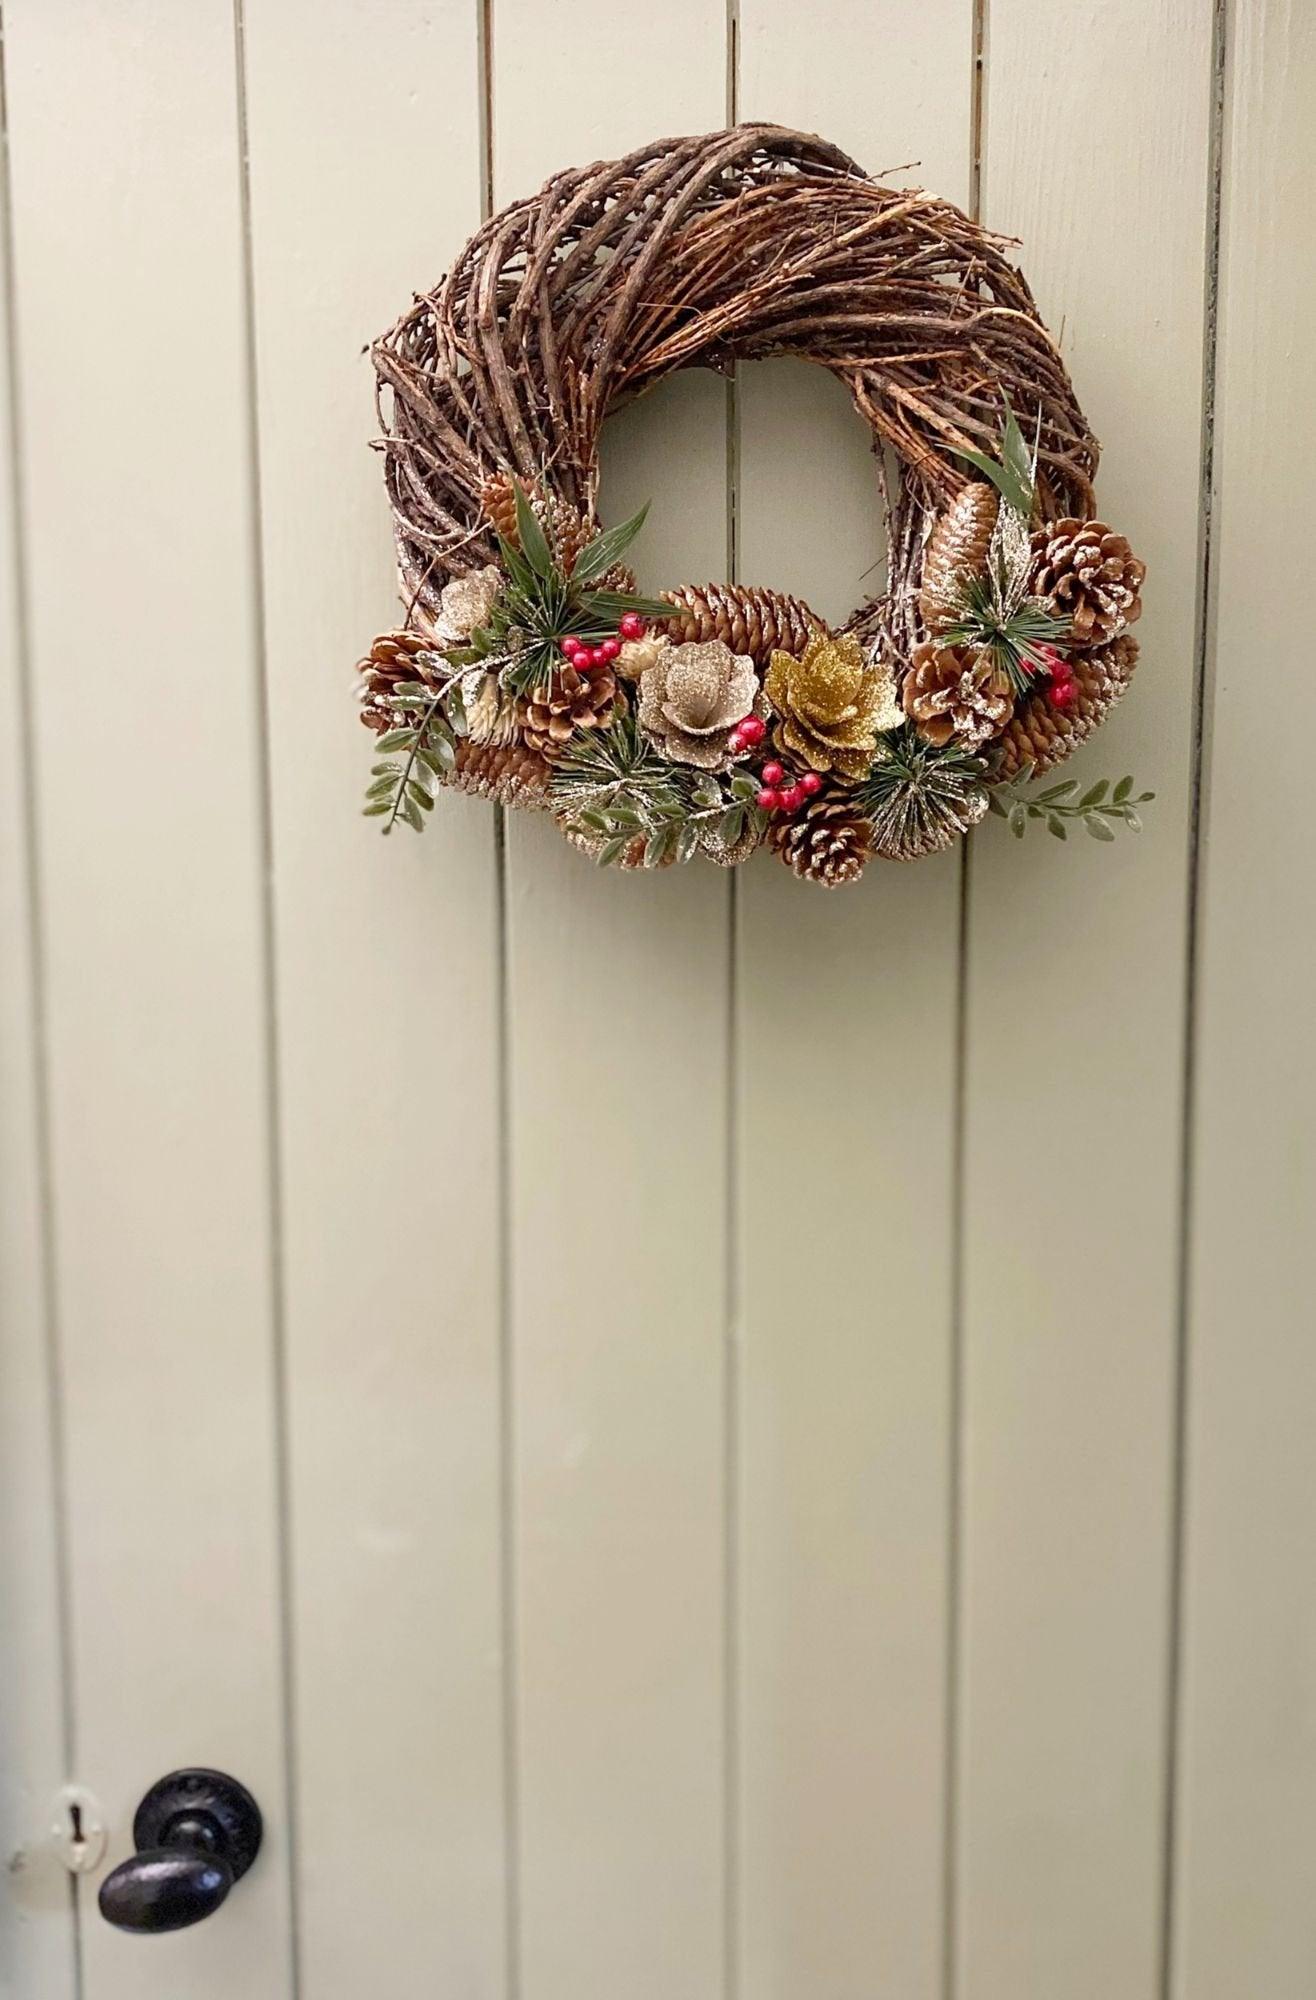 Twisted Pine & Berry Botanical Christmas Wreath 35cm - £58.99 - 